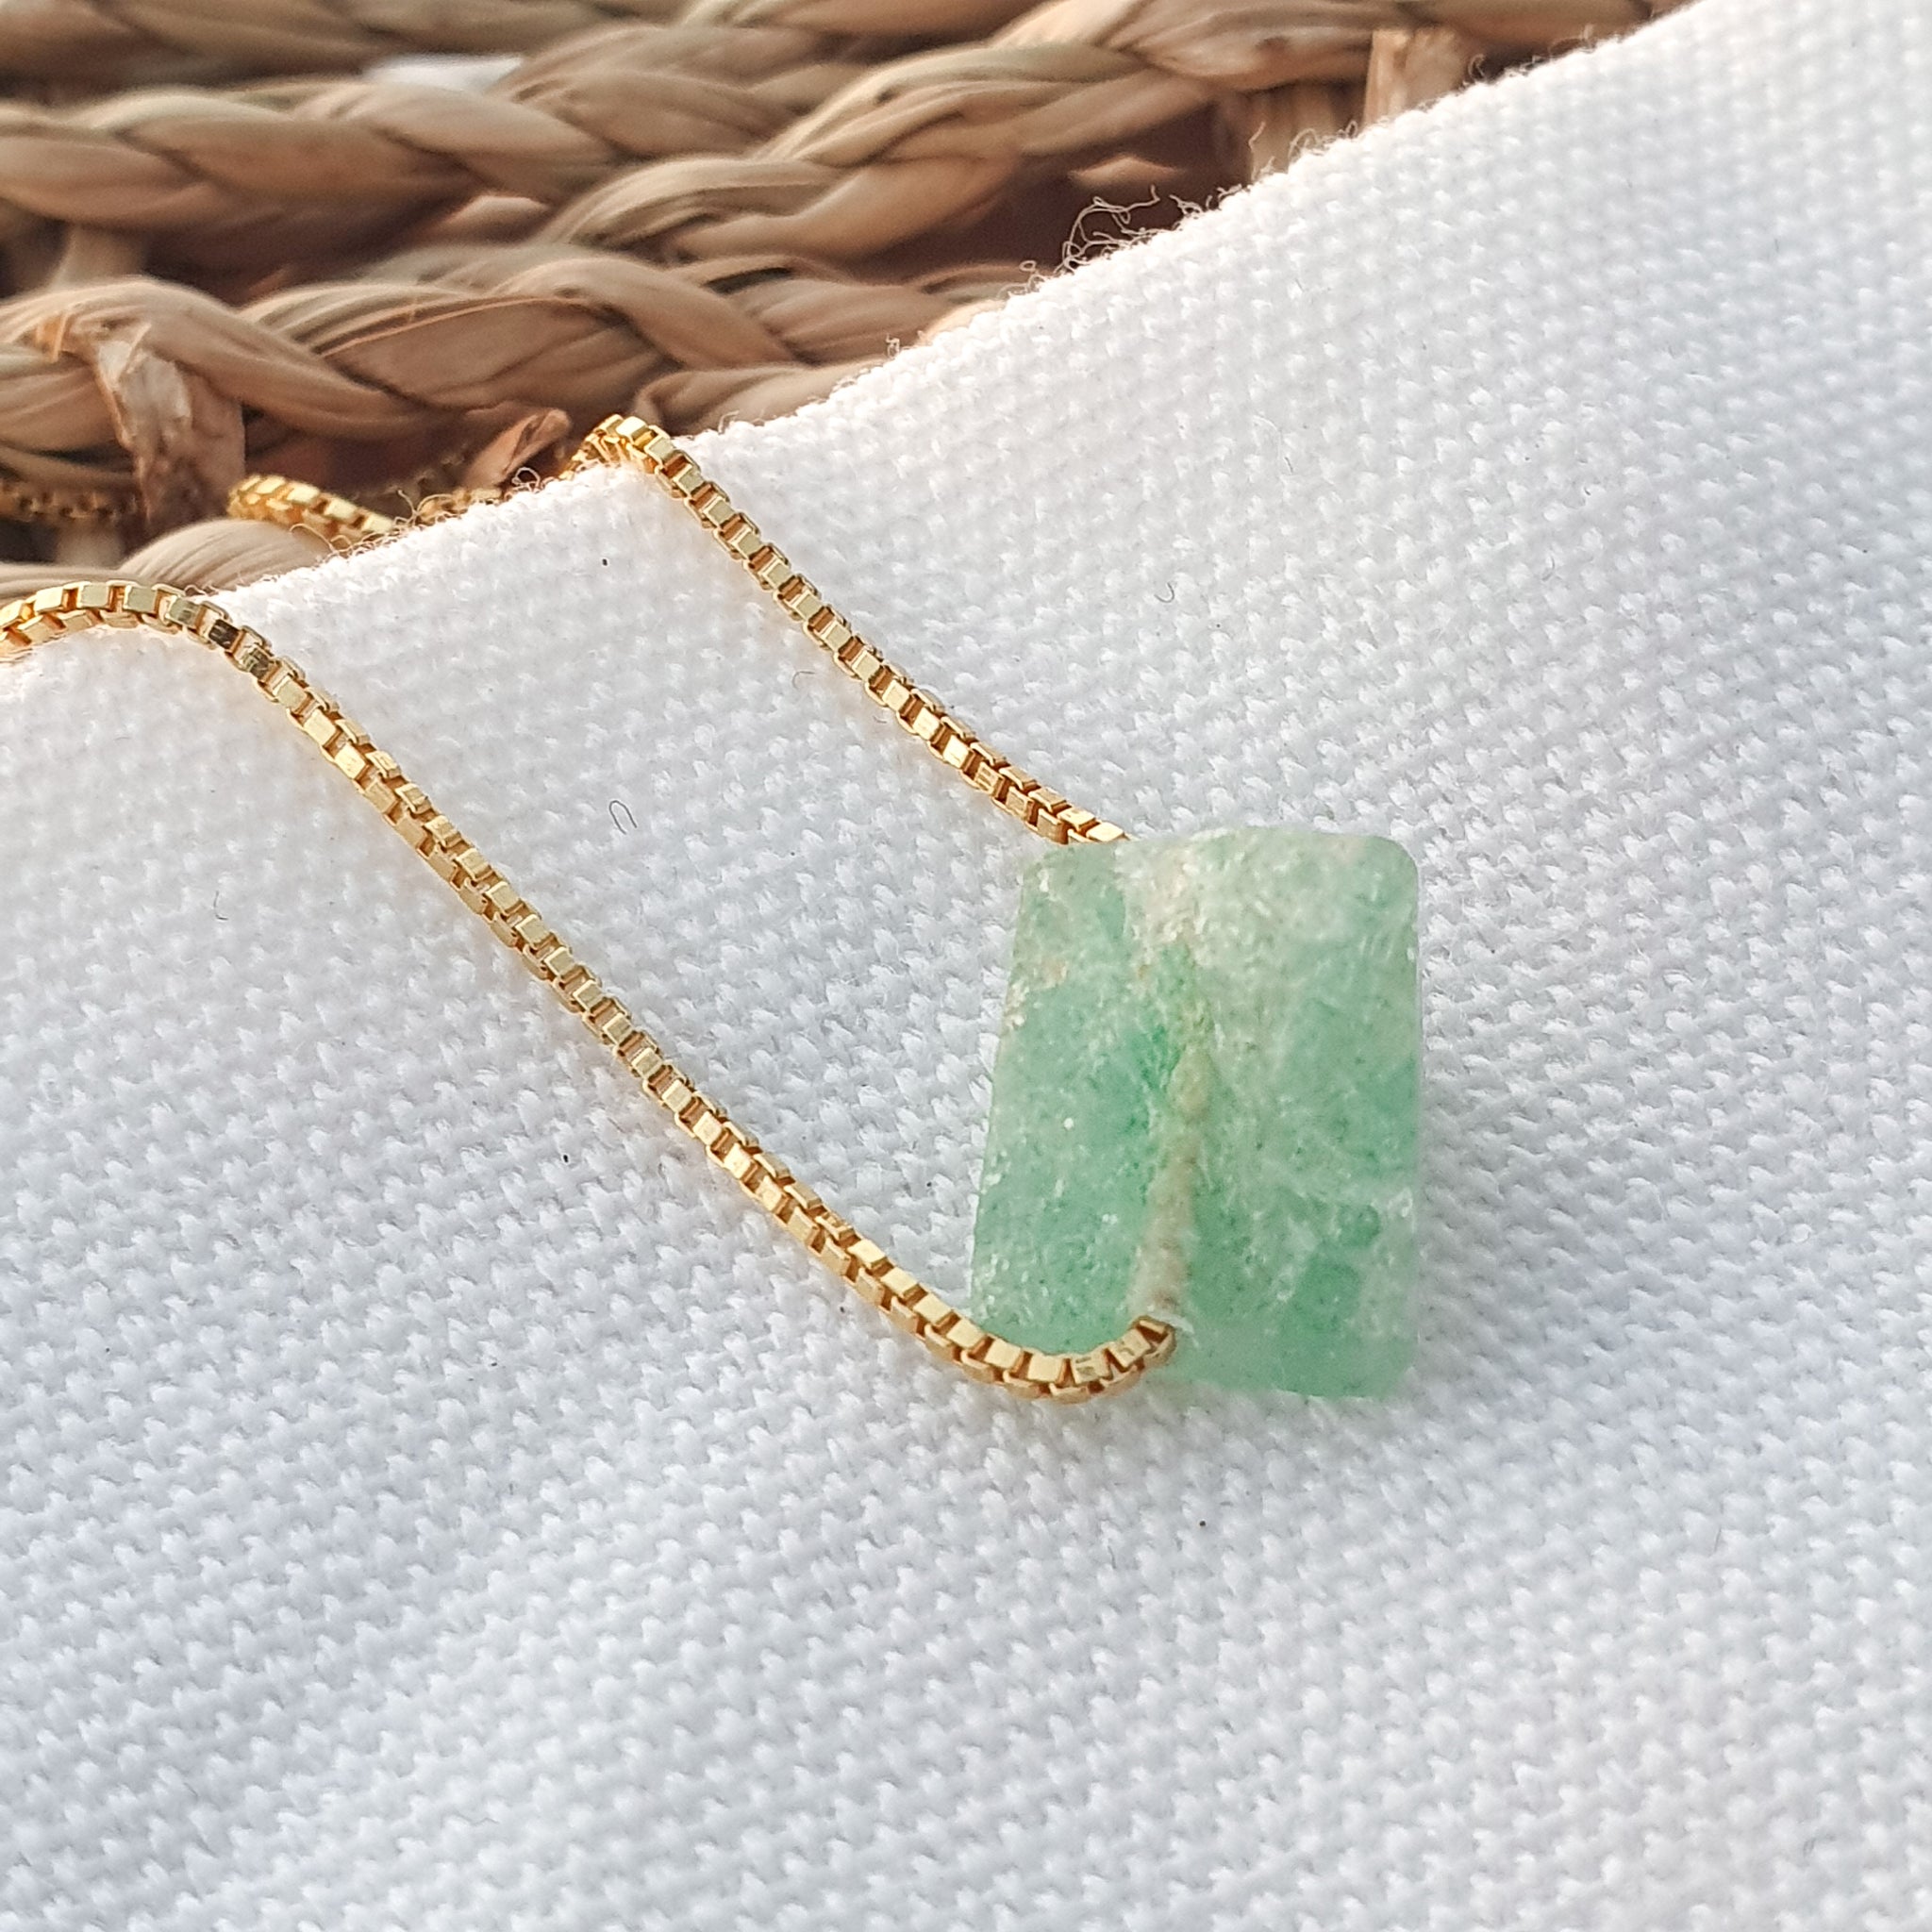 Crystal Komboloi Anxiety Bracelet/Necklace - Green Aventurine